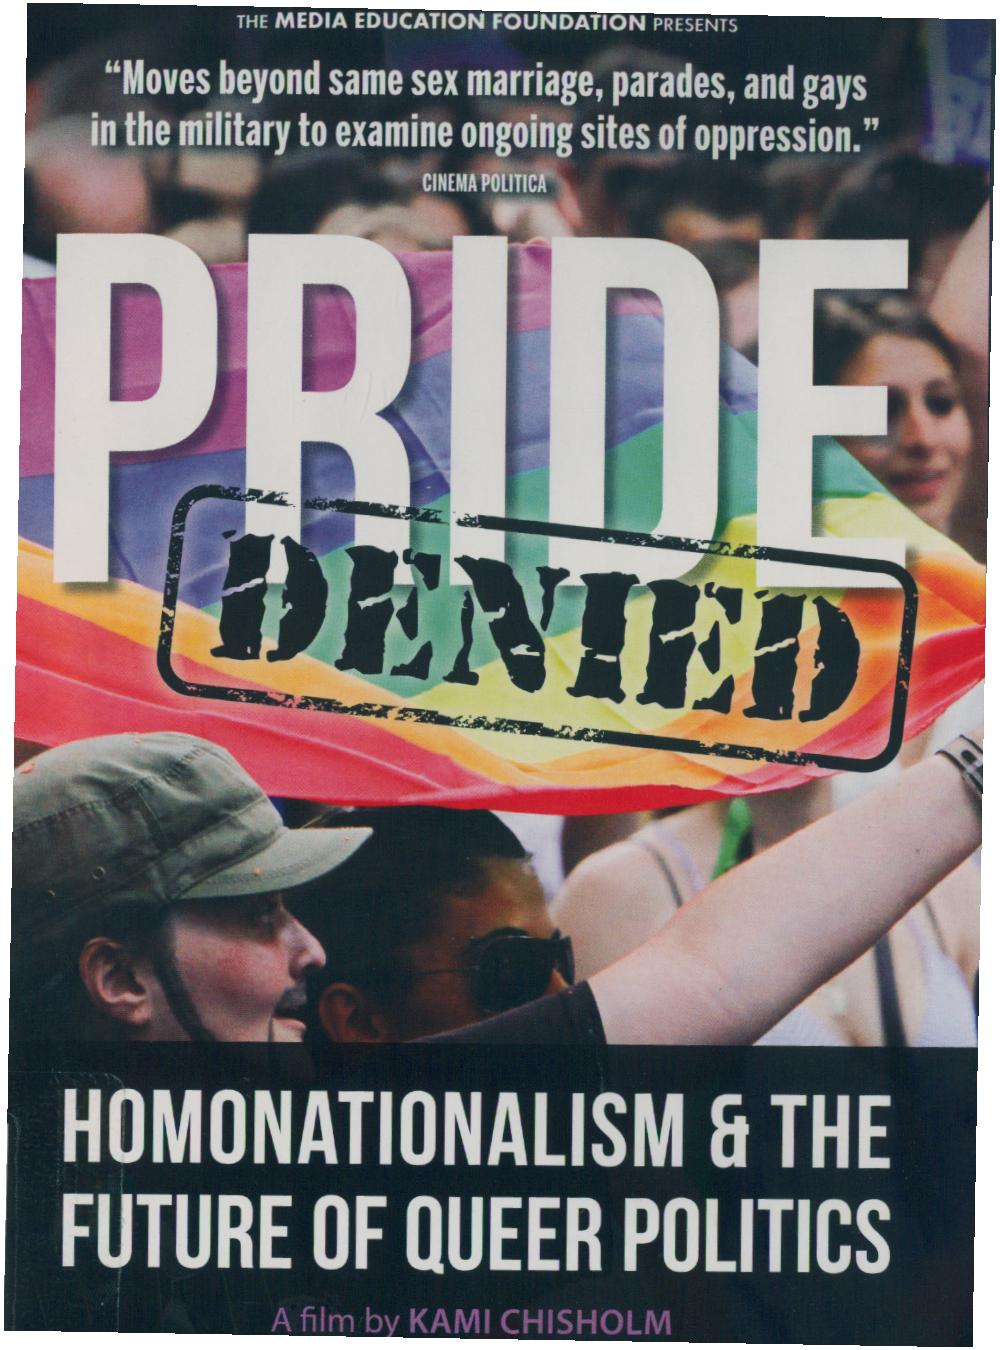 Pride Denied: Homonationalism & the Future of Queer Politics video jacket